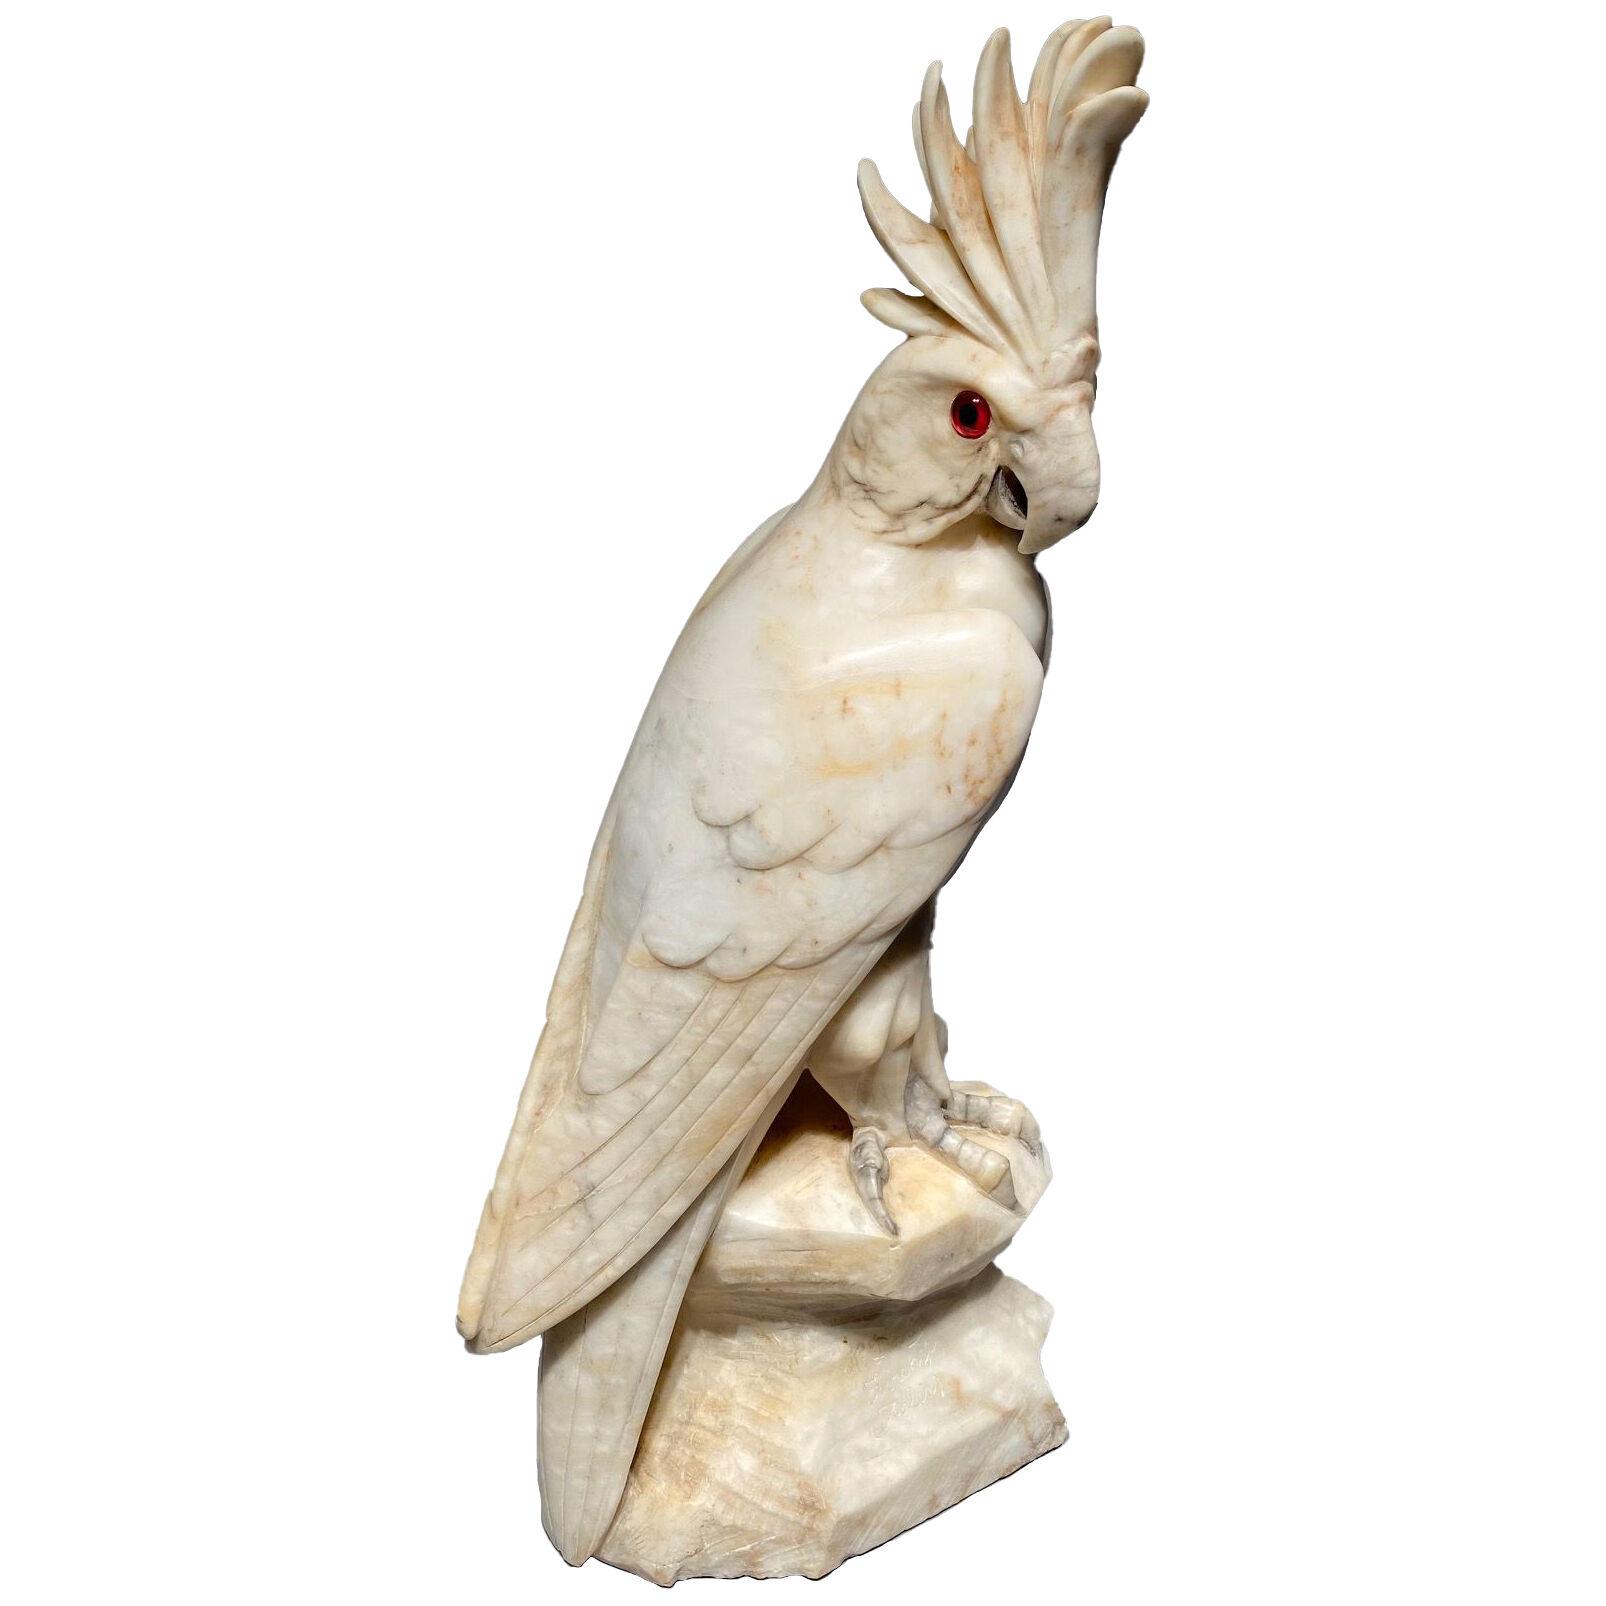 An cockatoo sculpture in alabaster